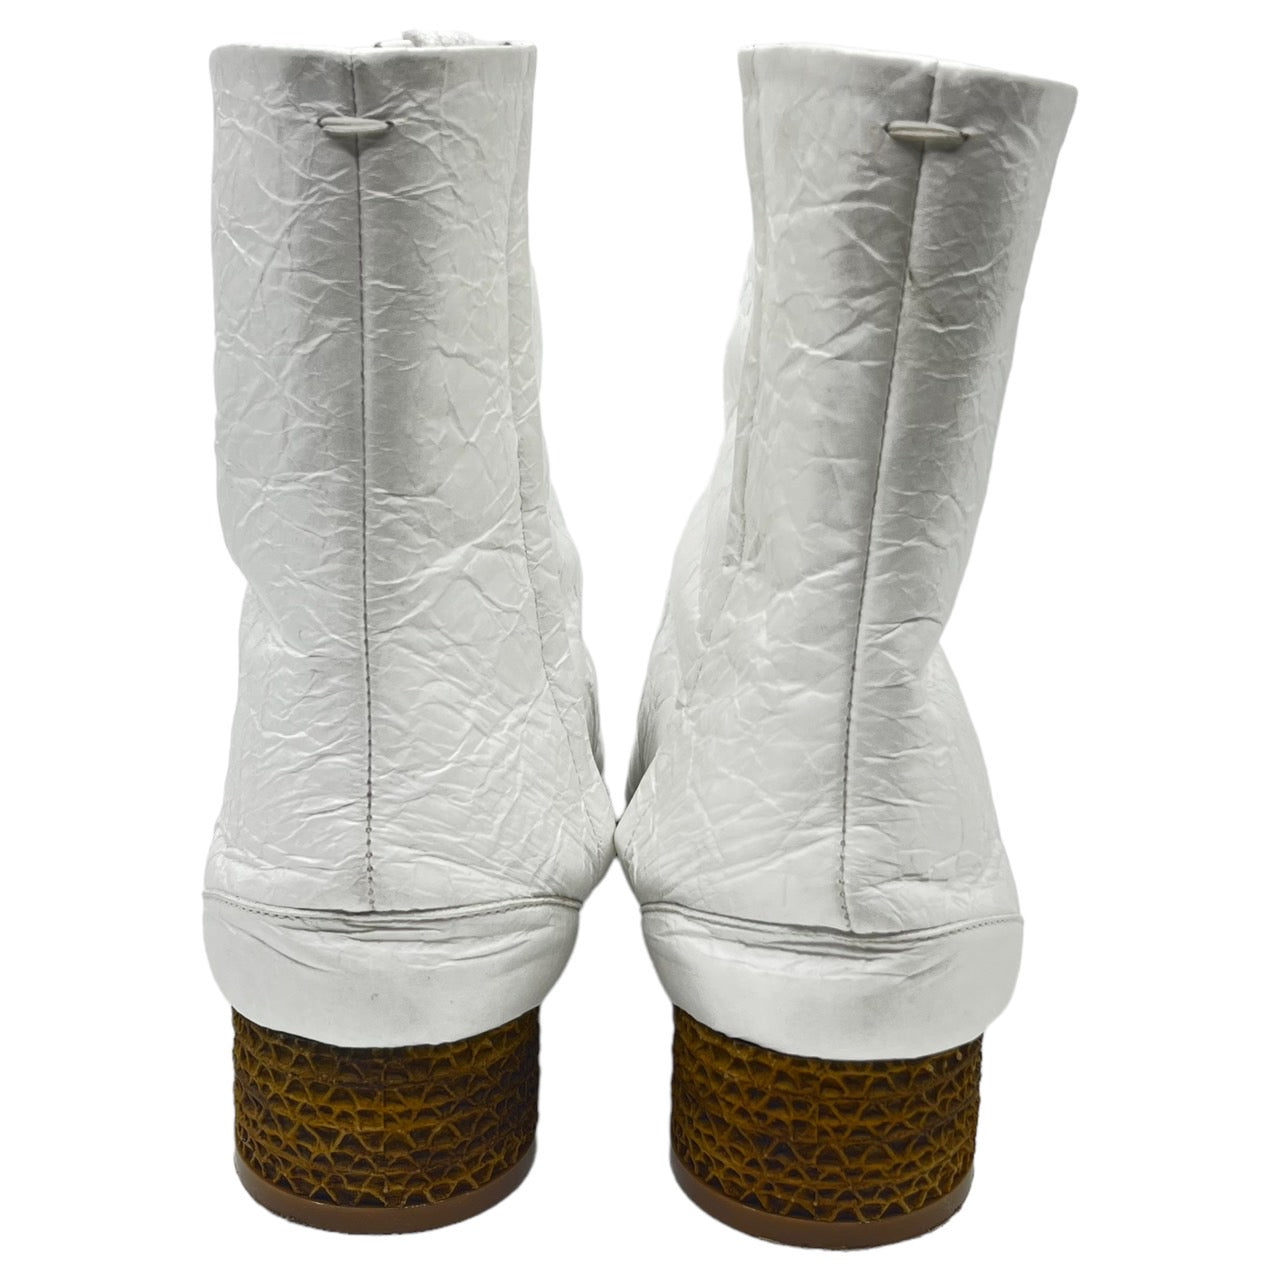 MAISON MARGIELA(メゾンマルジェラ) Wrinkle processing corrugated heels TABI  boots/シワ加工コルゲートヒール足袋ブーツ S58WU0382 SIZE 36(23.0cm) ホワイト 箱付